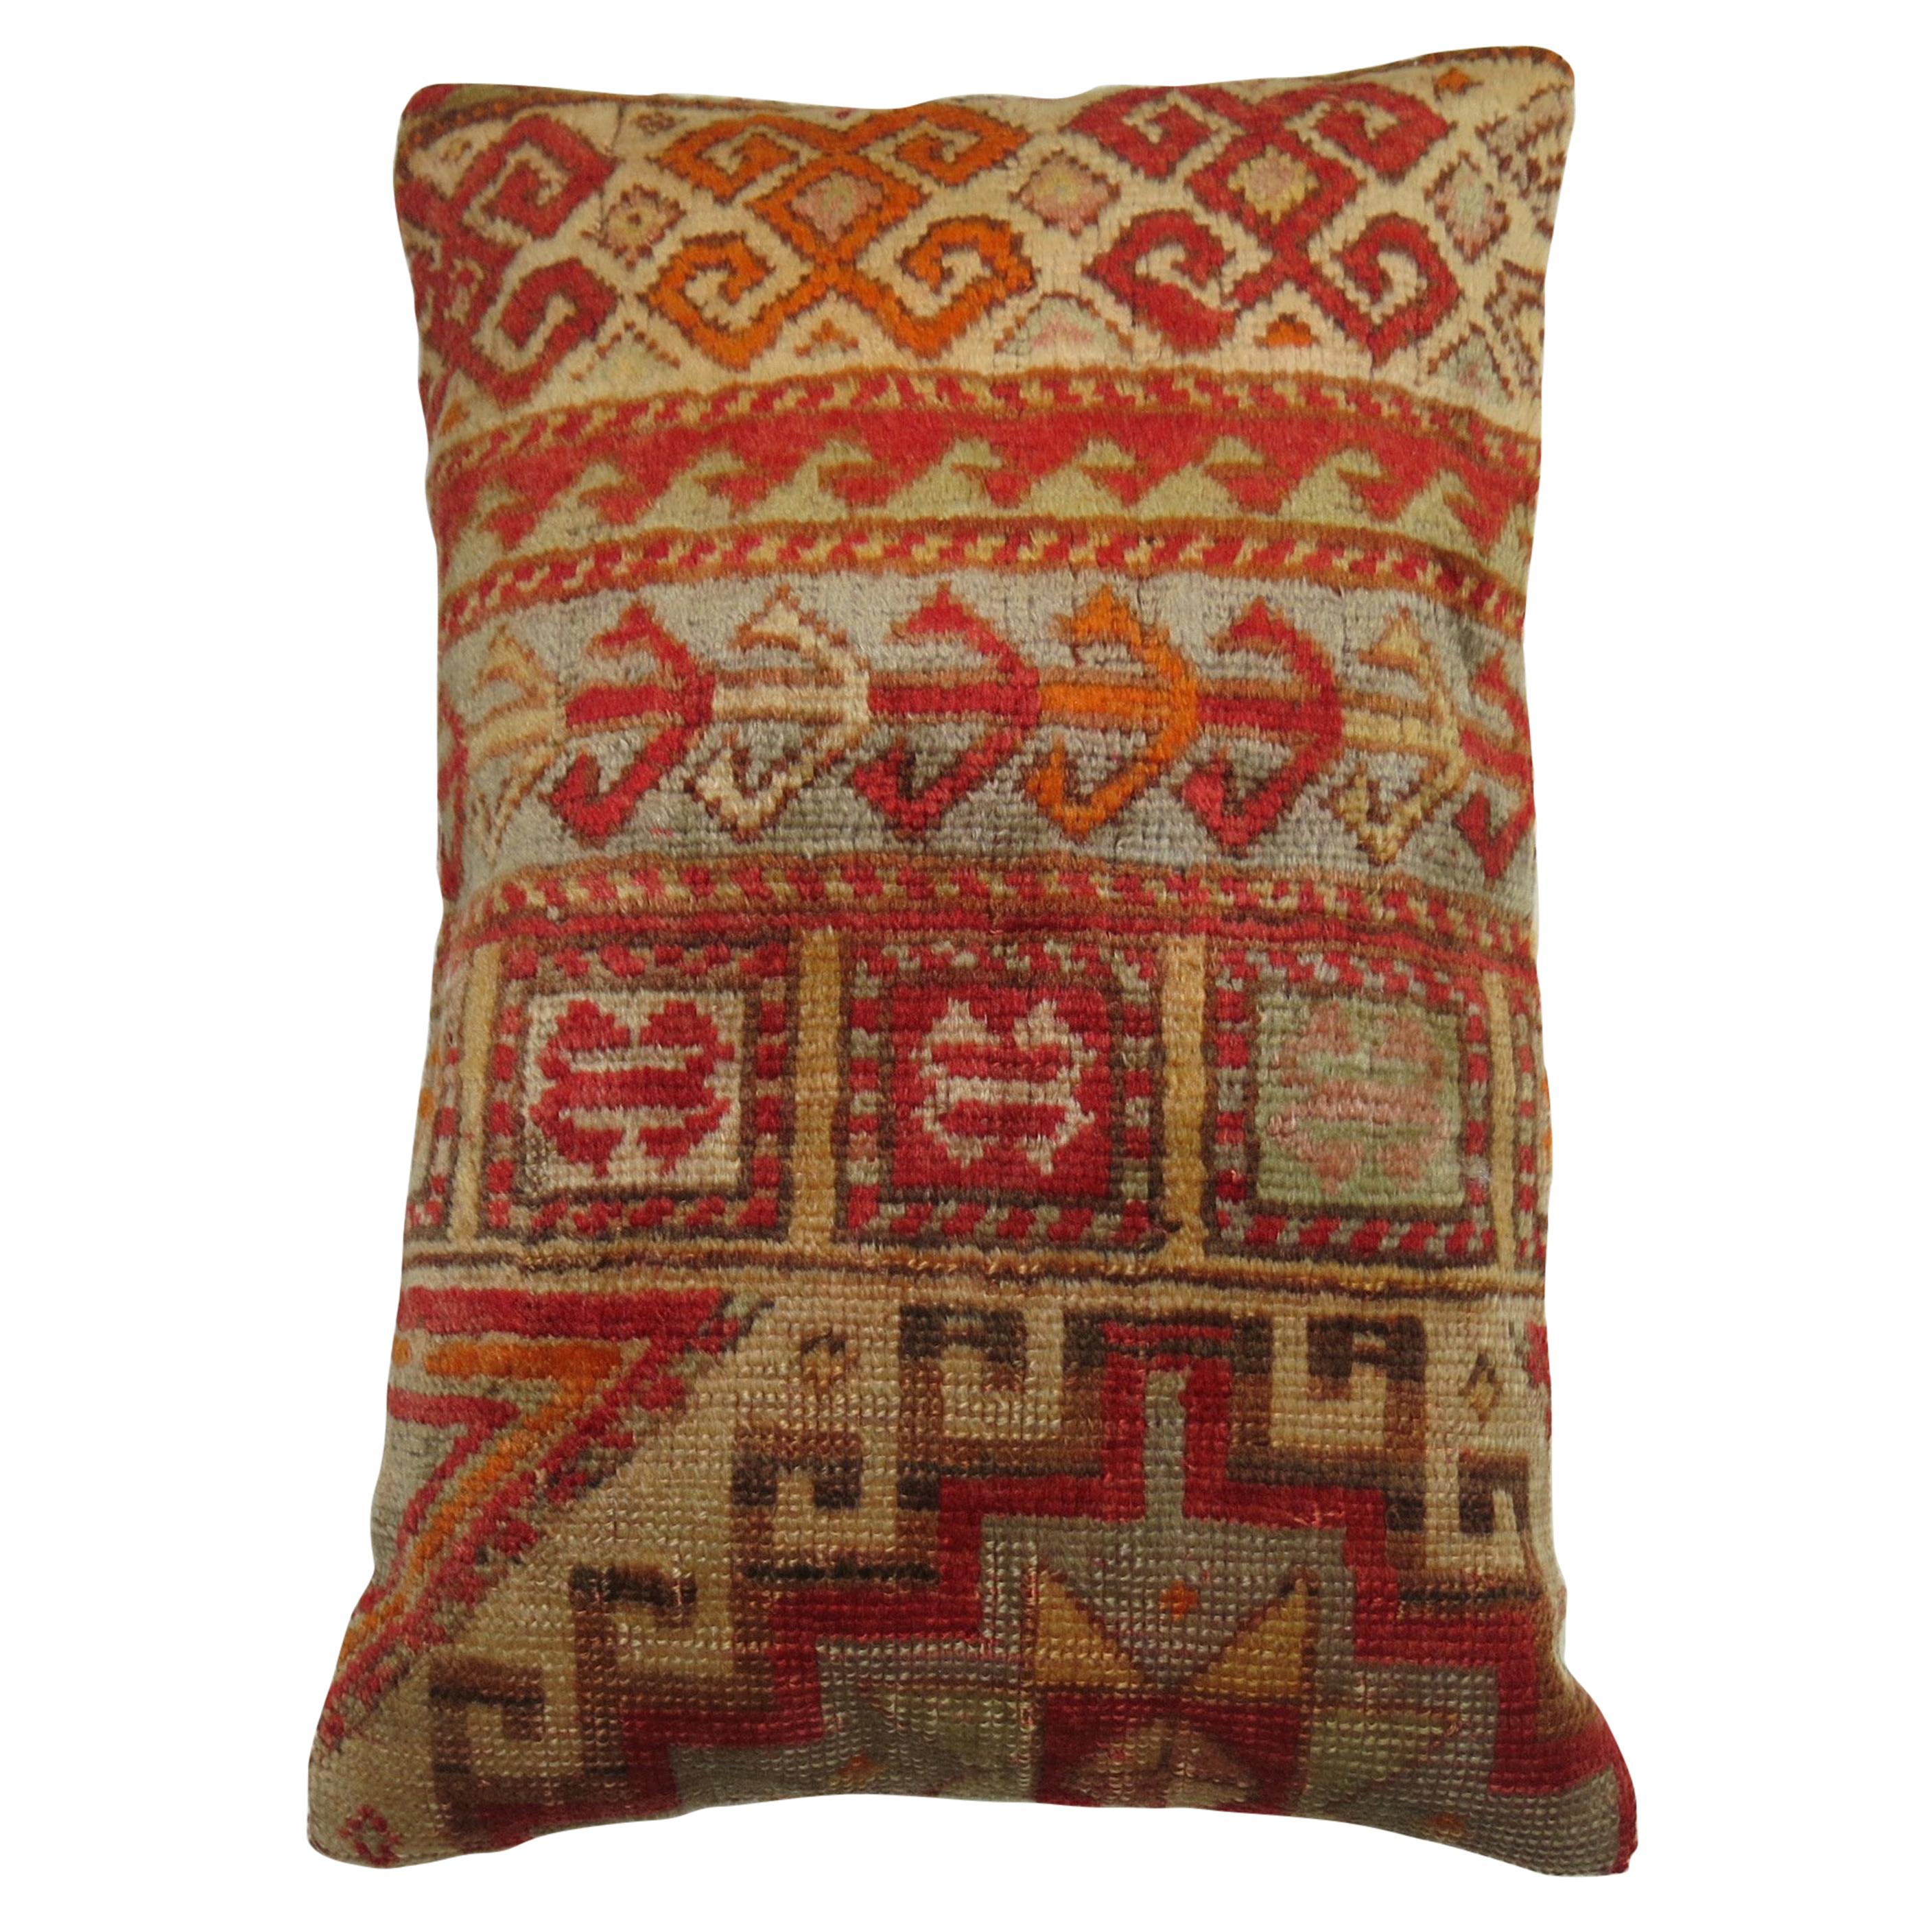 Antique Turkish Sivas Rug Pillow